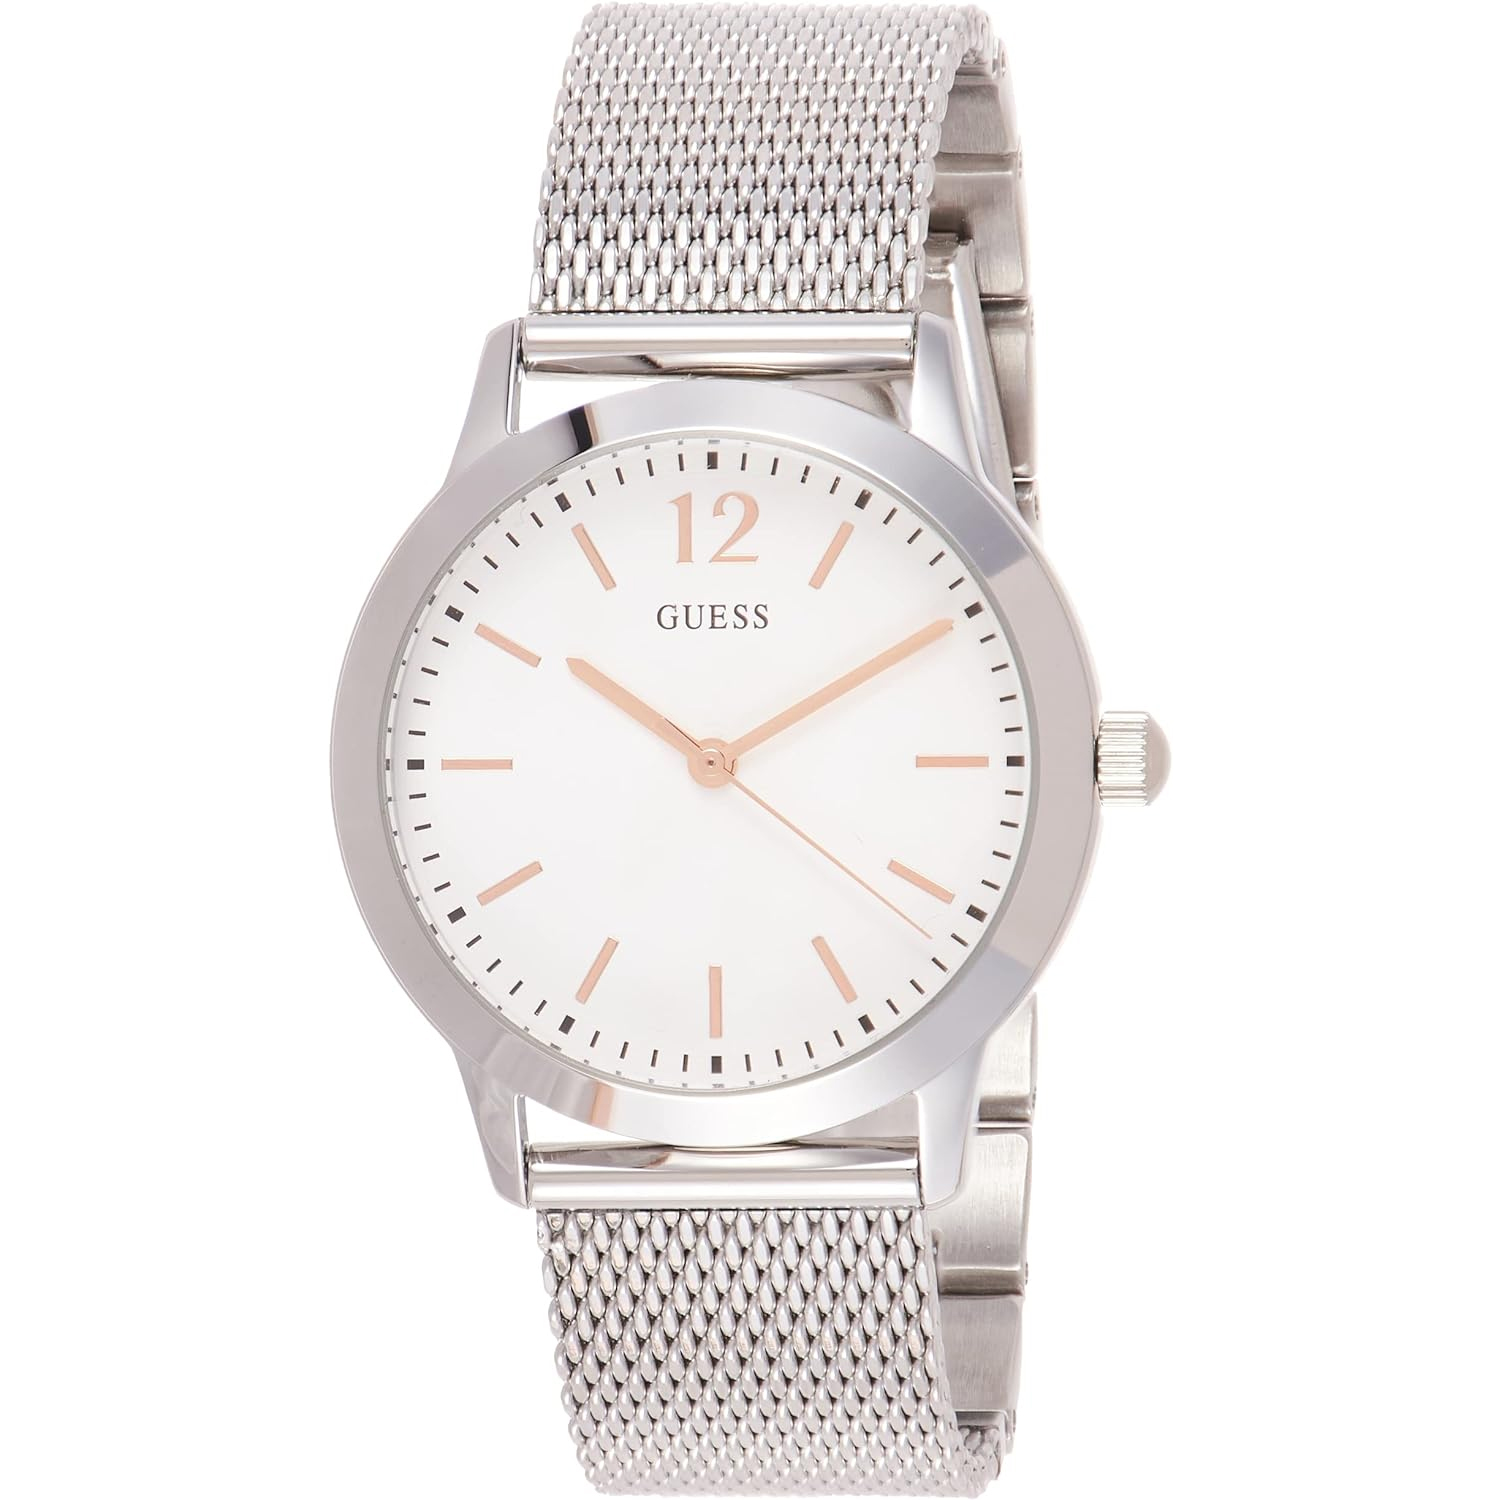 Guess Men's Classic White Dial Watch - W0921G1